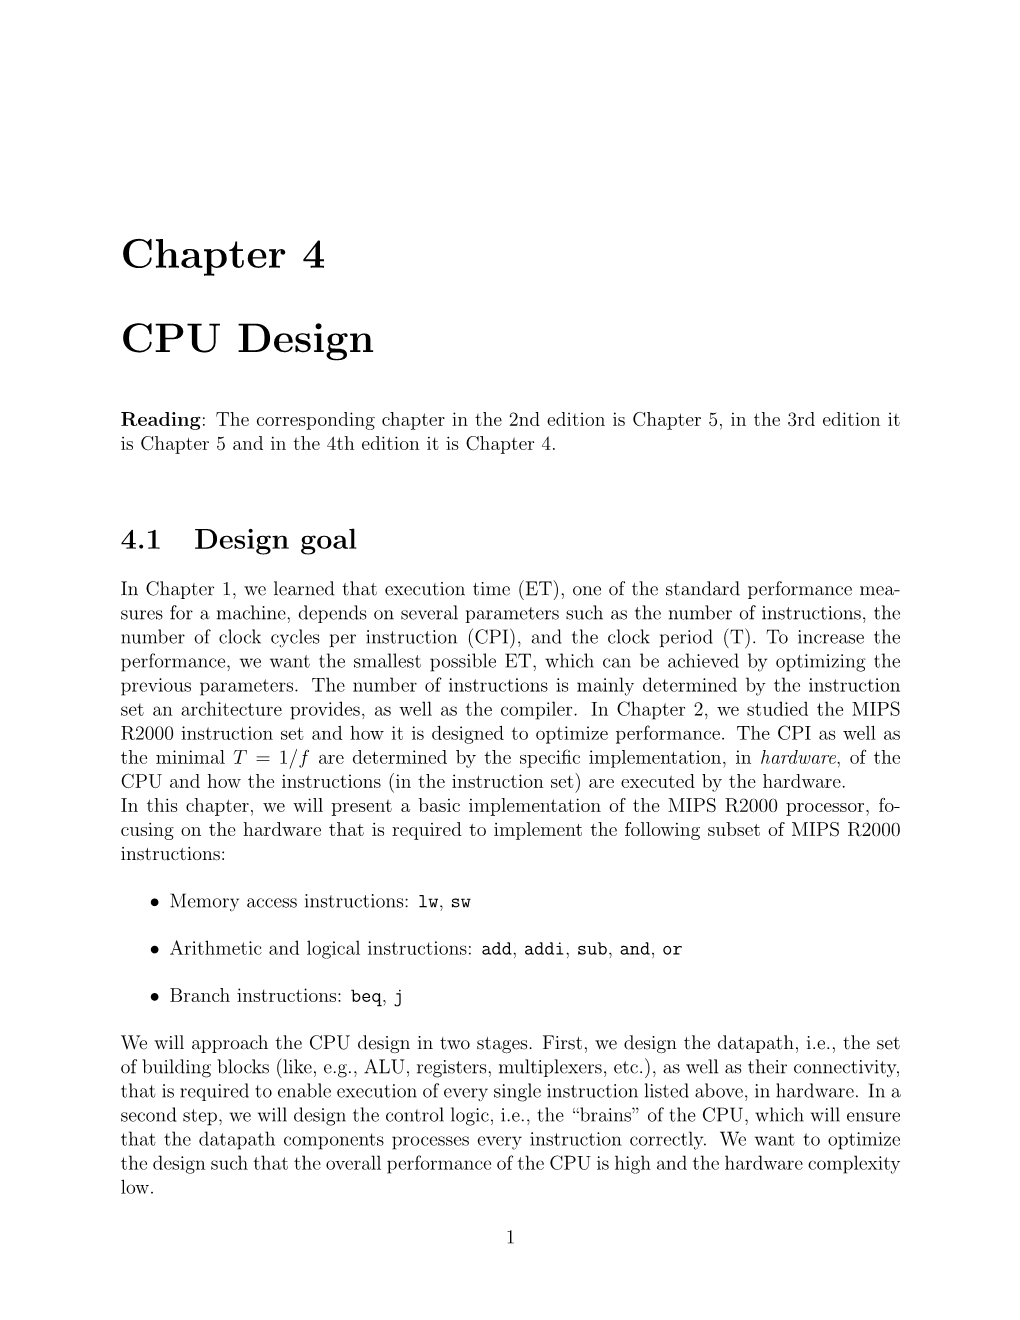 Chapter 4 CPU Design